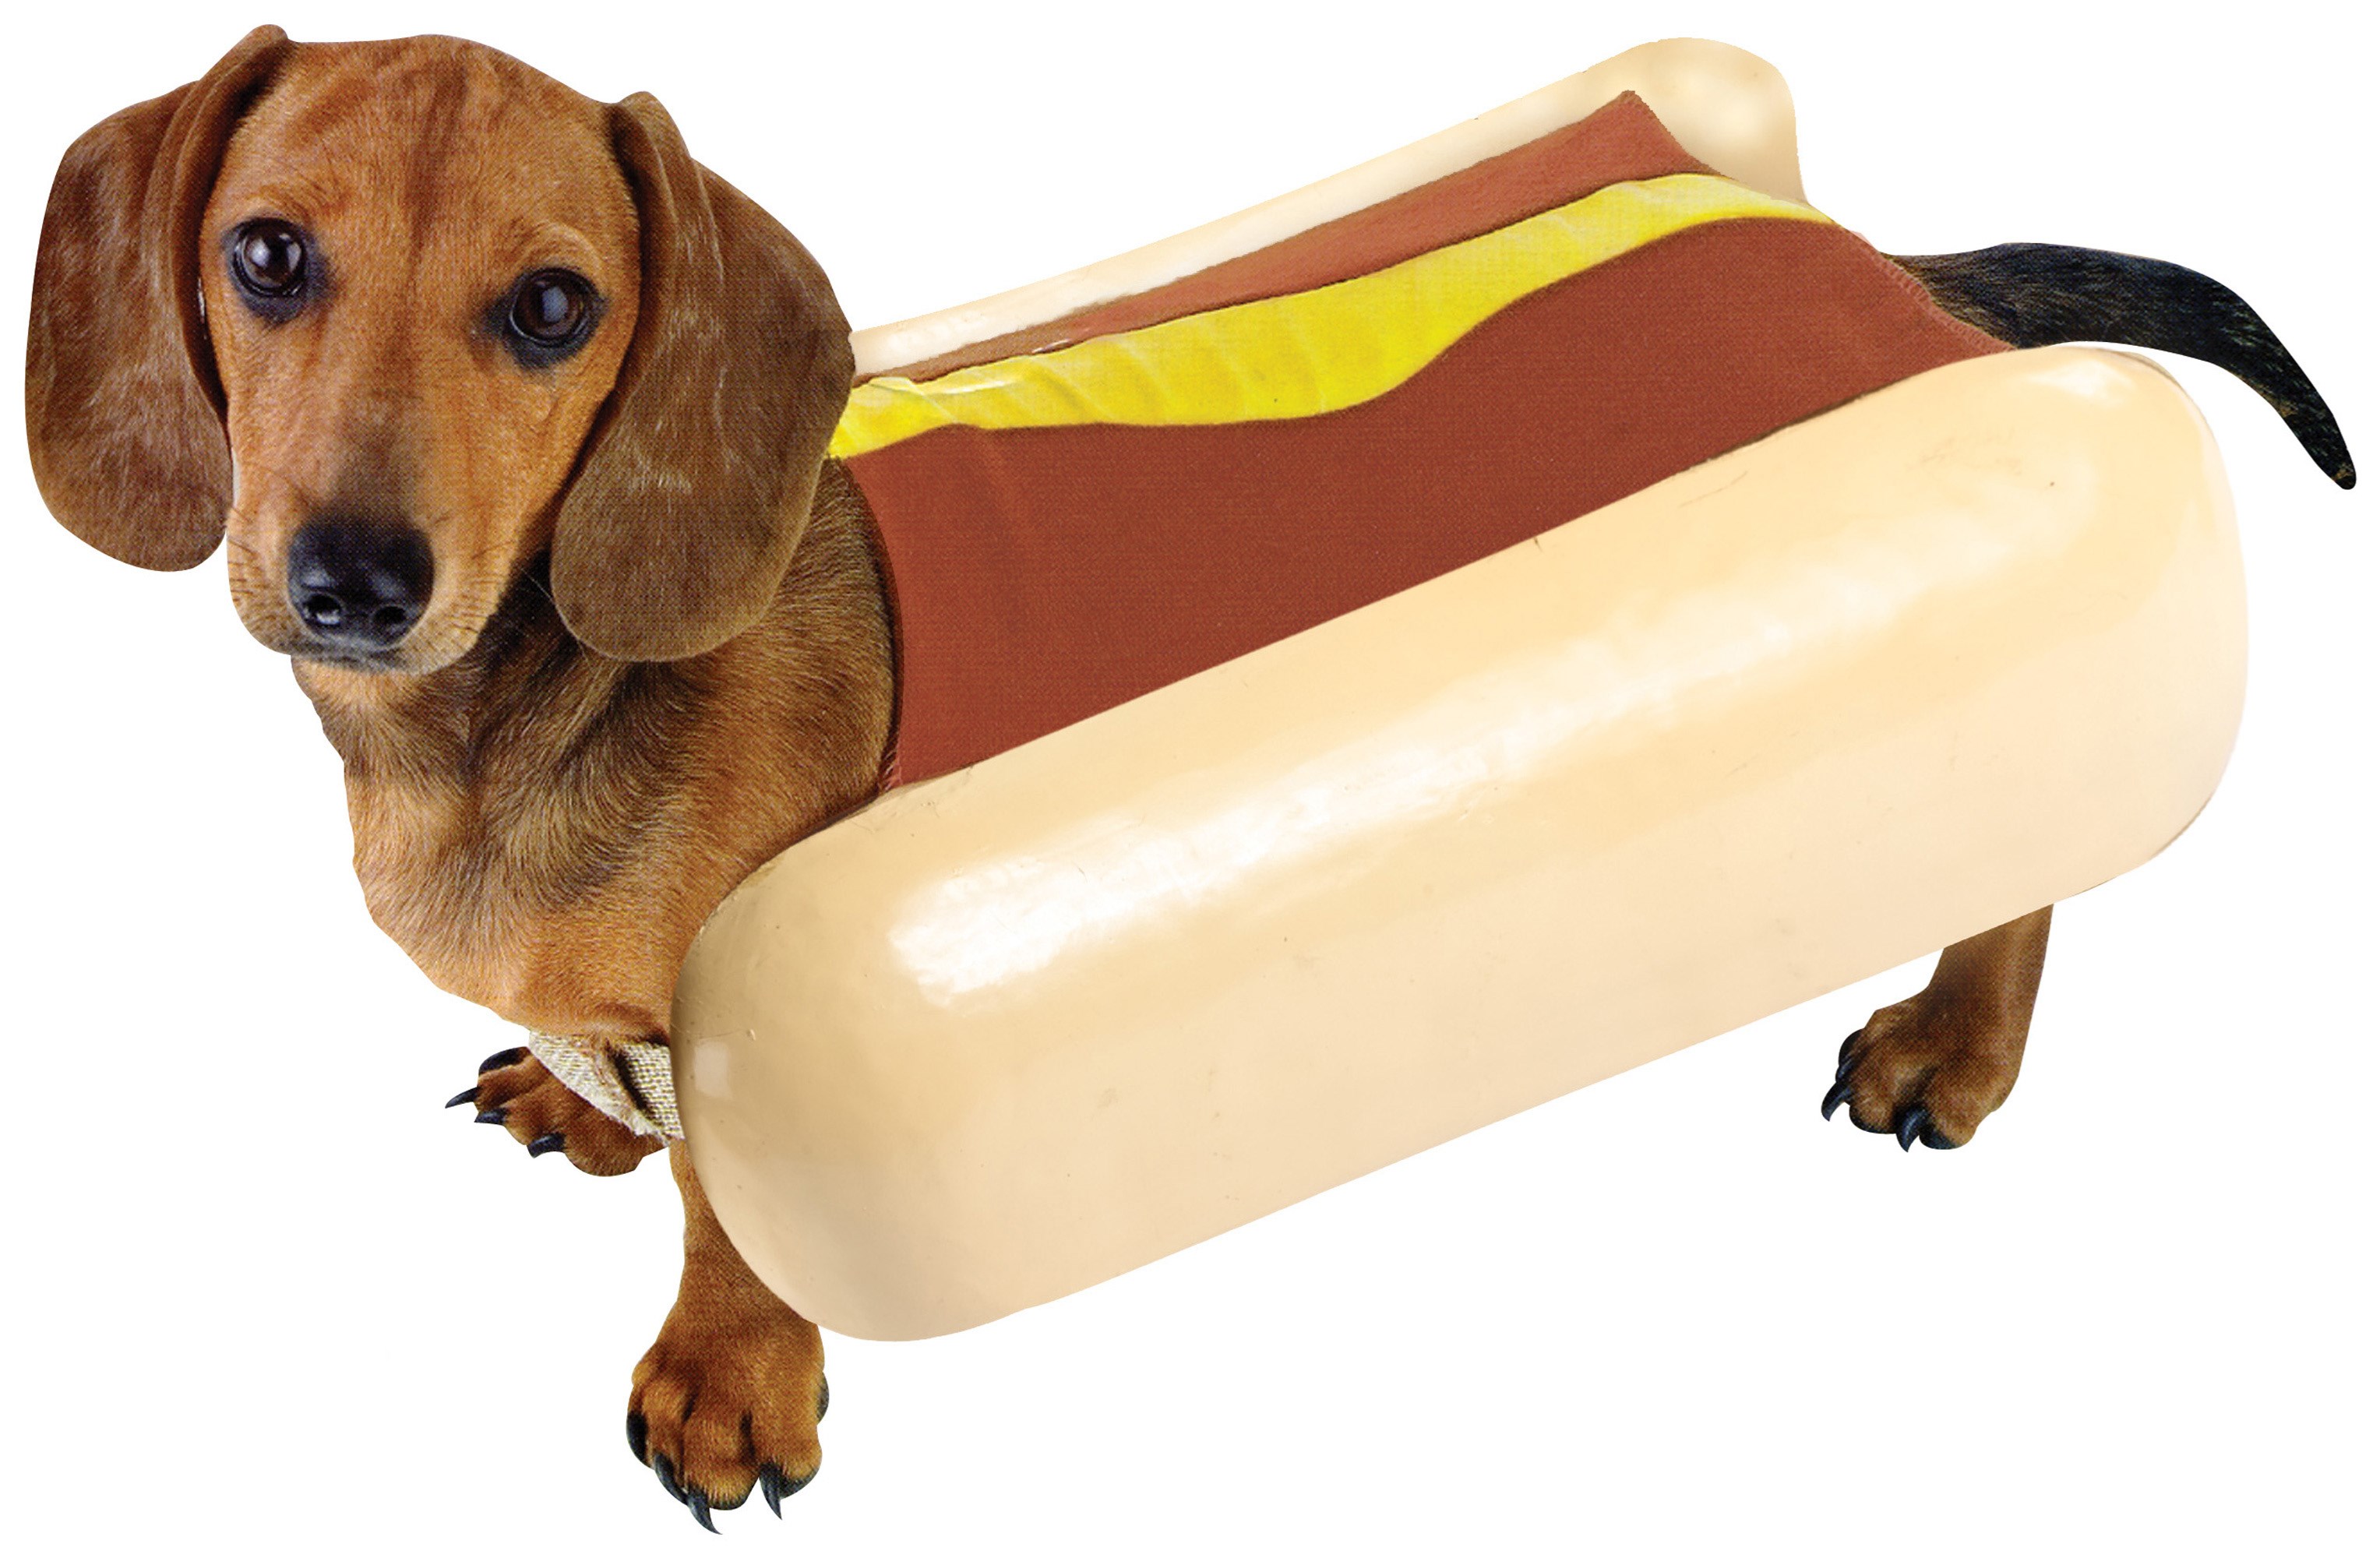 Hot Dog Pet Food Dog Costume